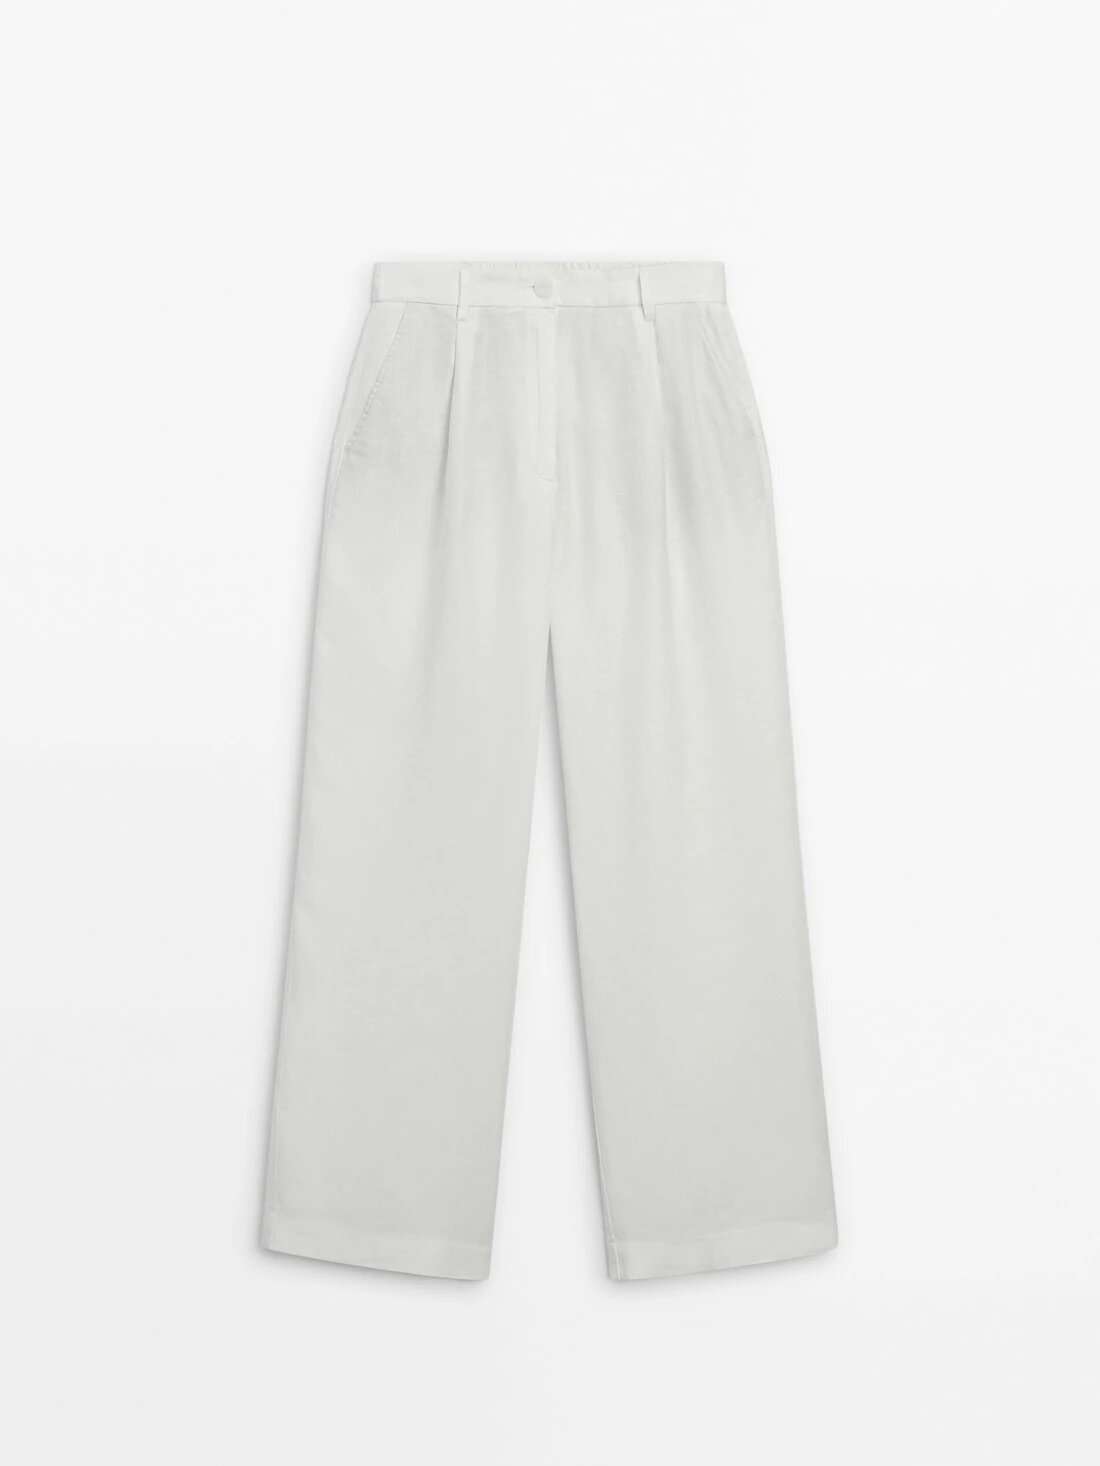 Pantalón blanco lino